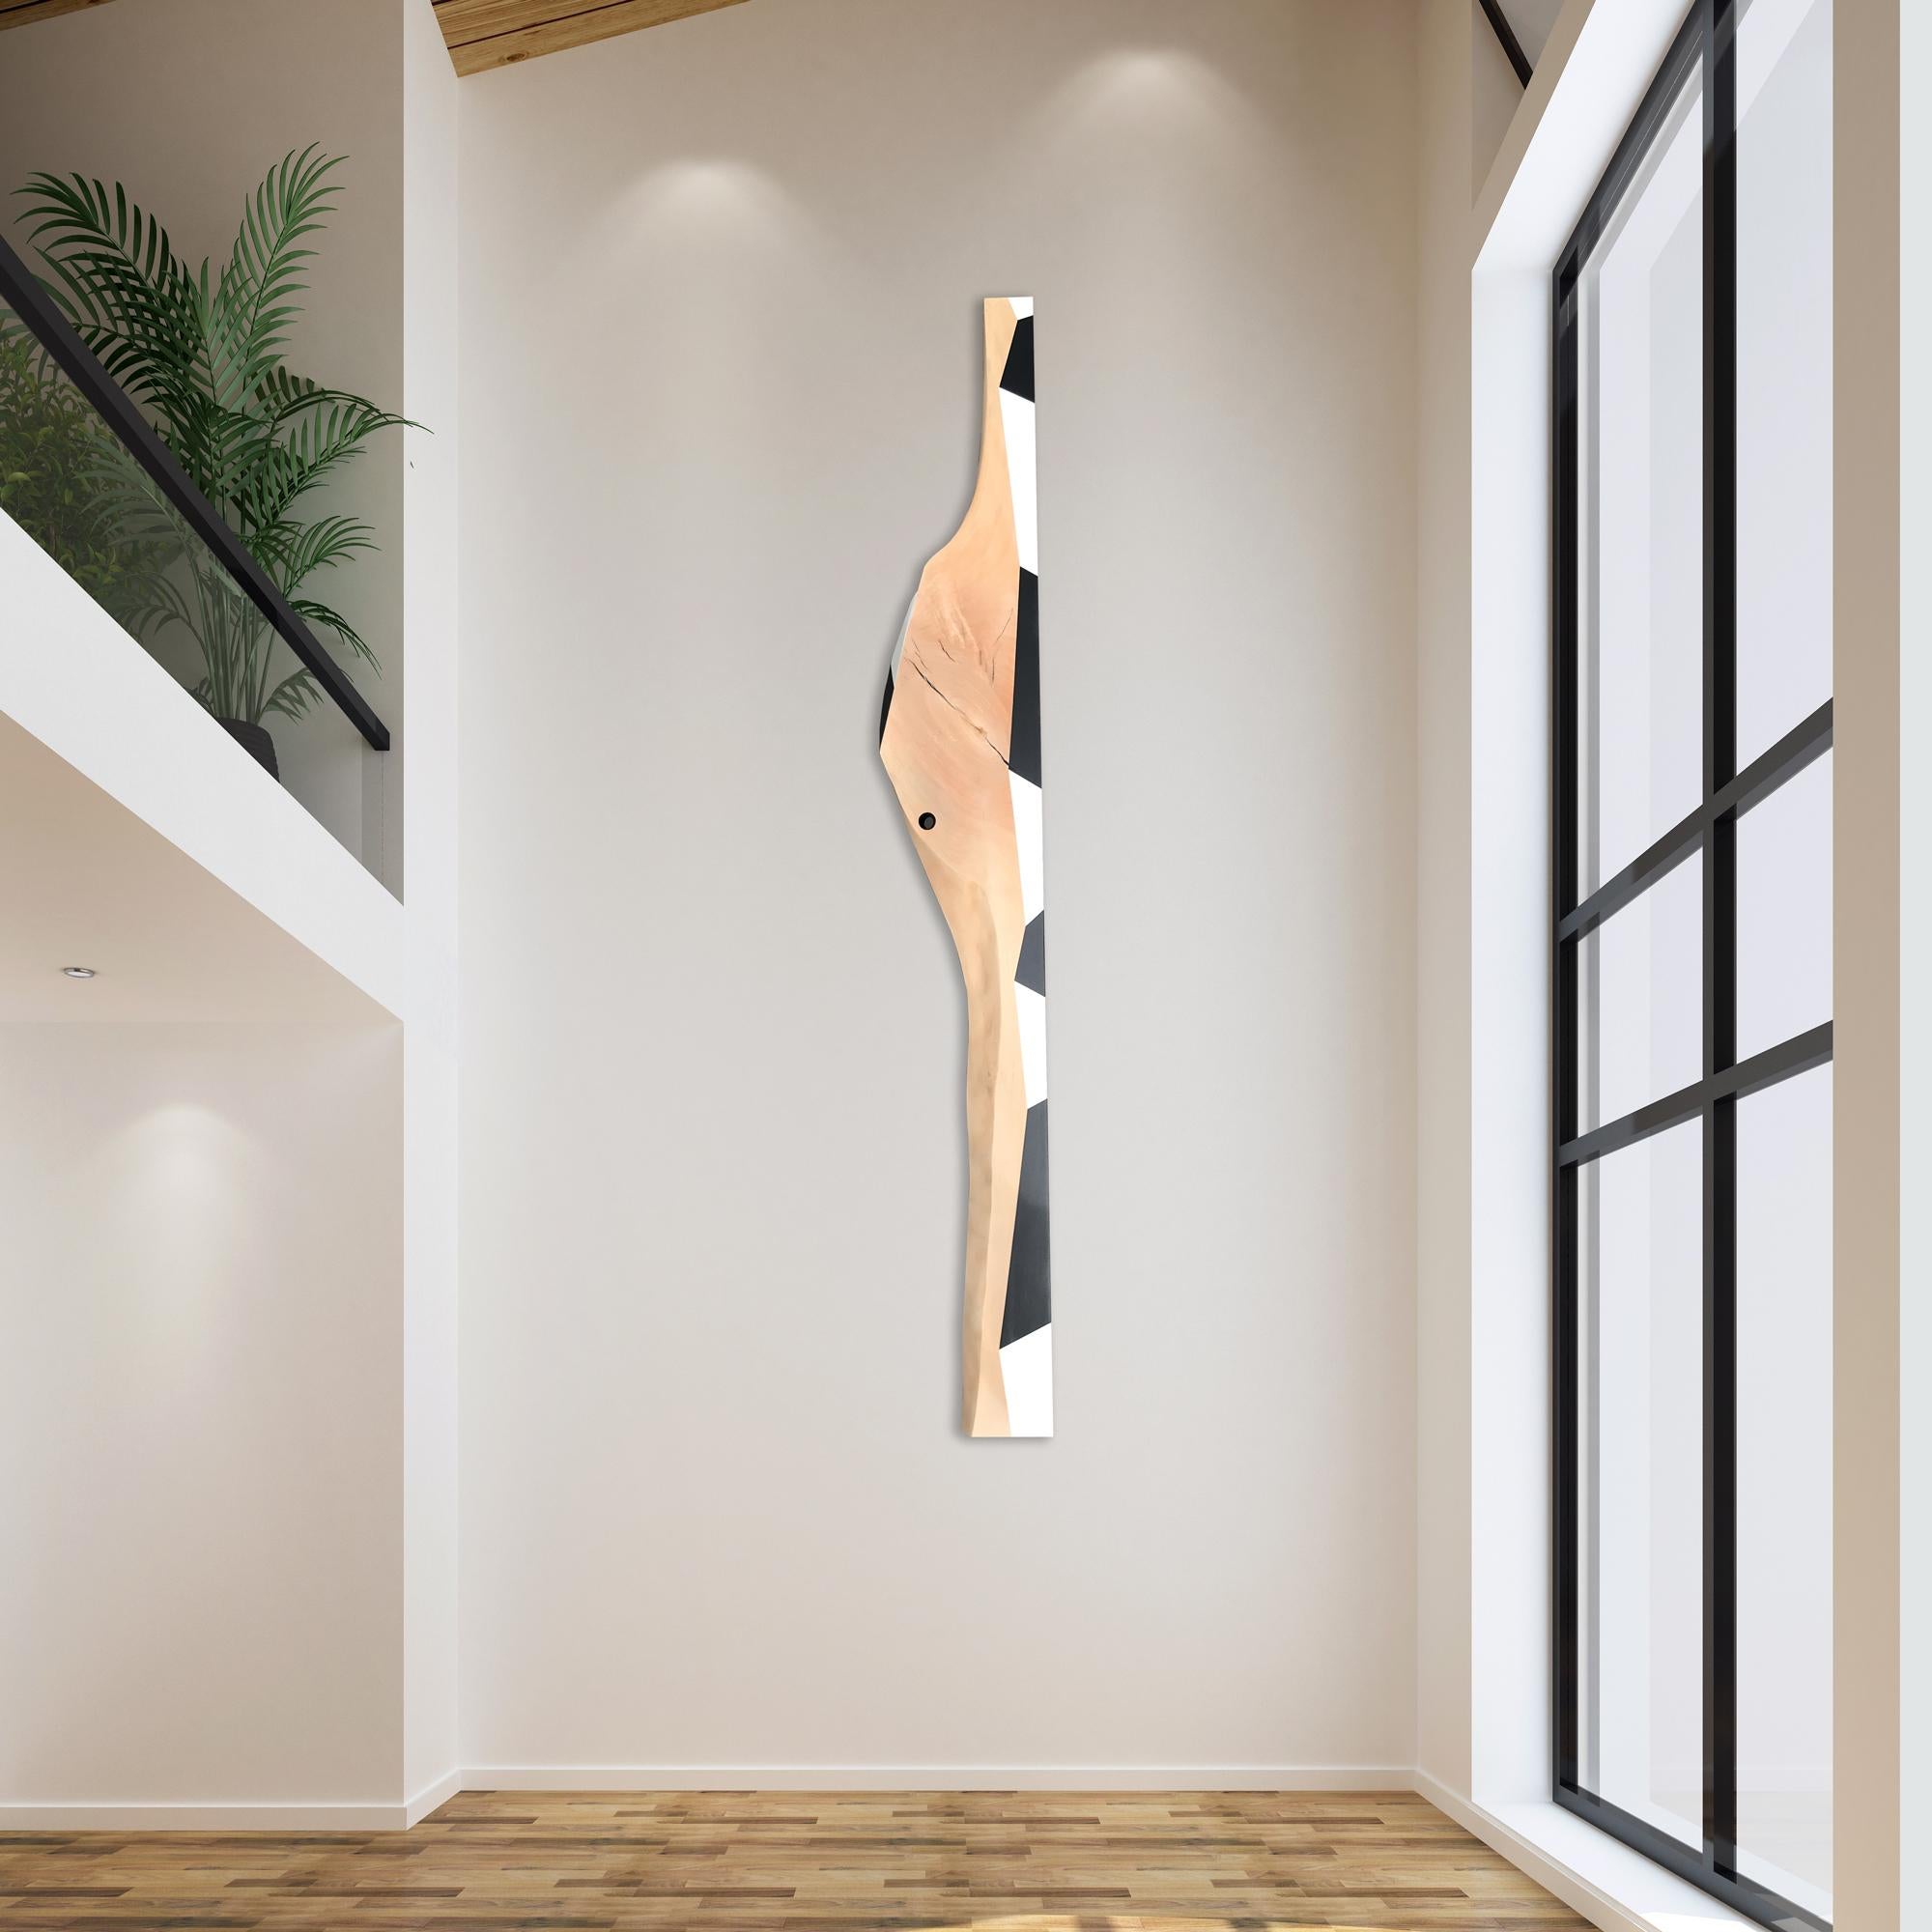 Scott Troxel Abstract Sculpture - "Skinny" Wood Wall Sculpture Modern, white, tan, black, brown, modern rustic mcm